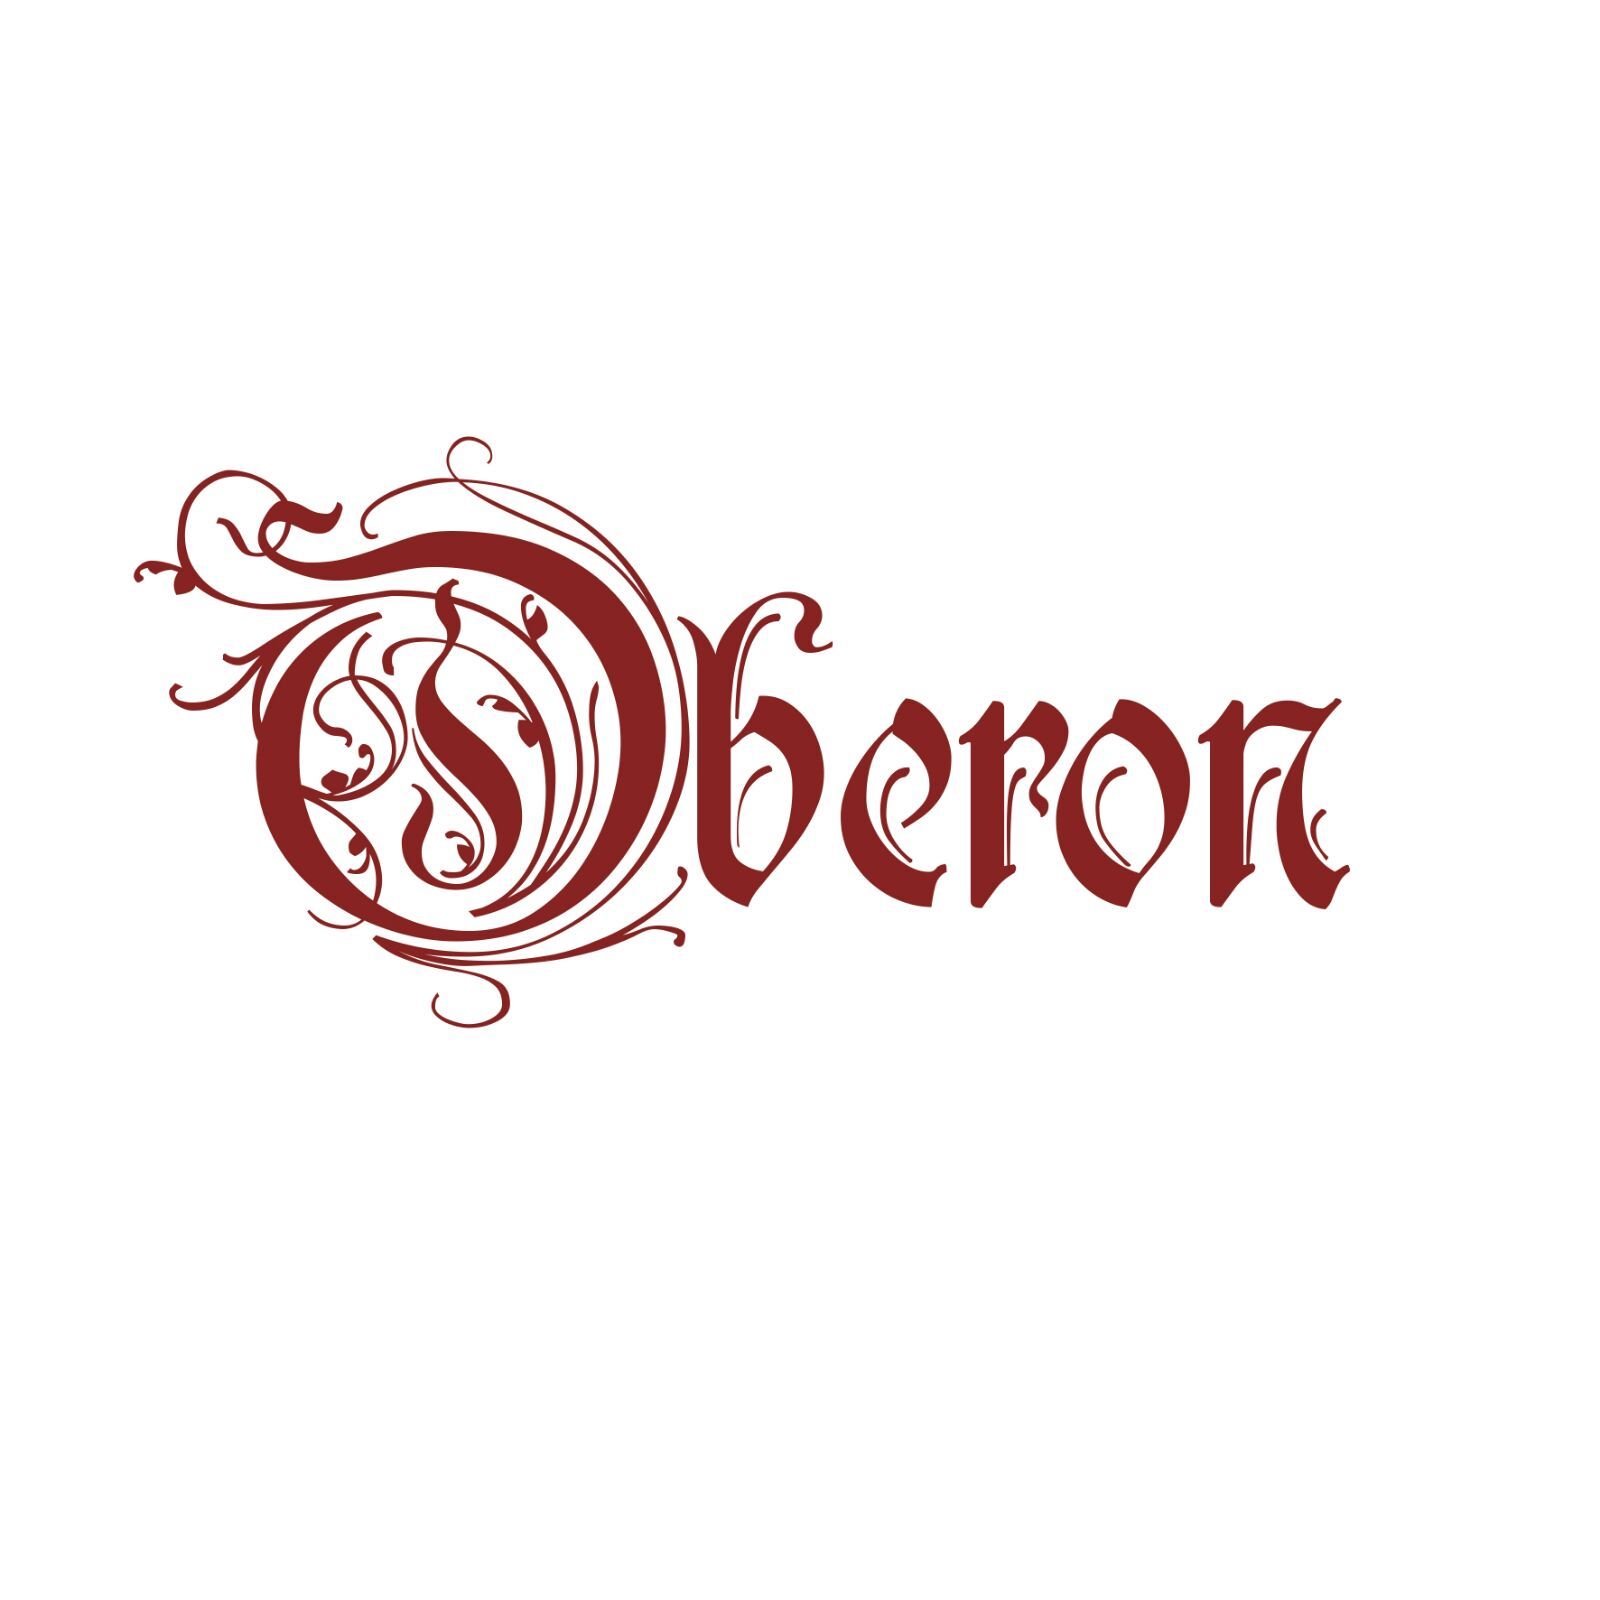 Oberon picture